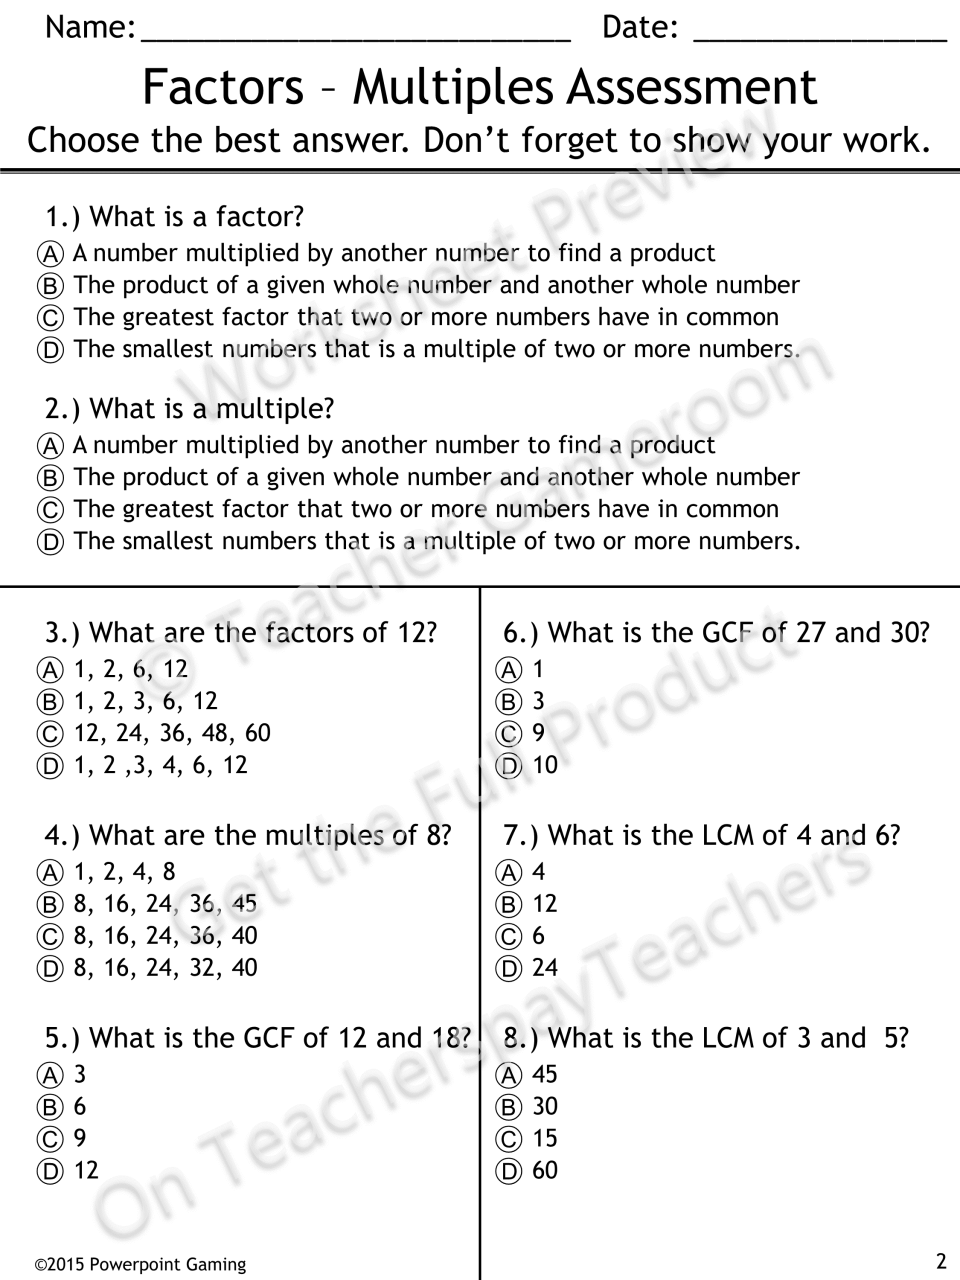 5th Grade Factors And Multiples Worksheet Pdf